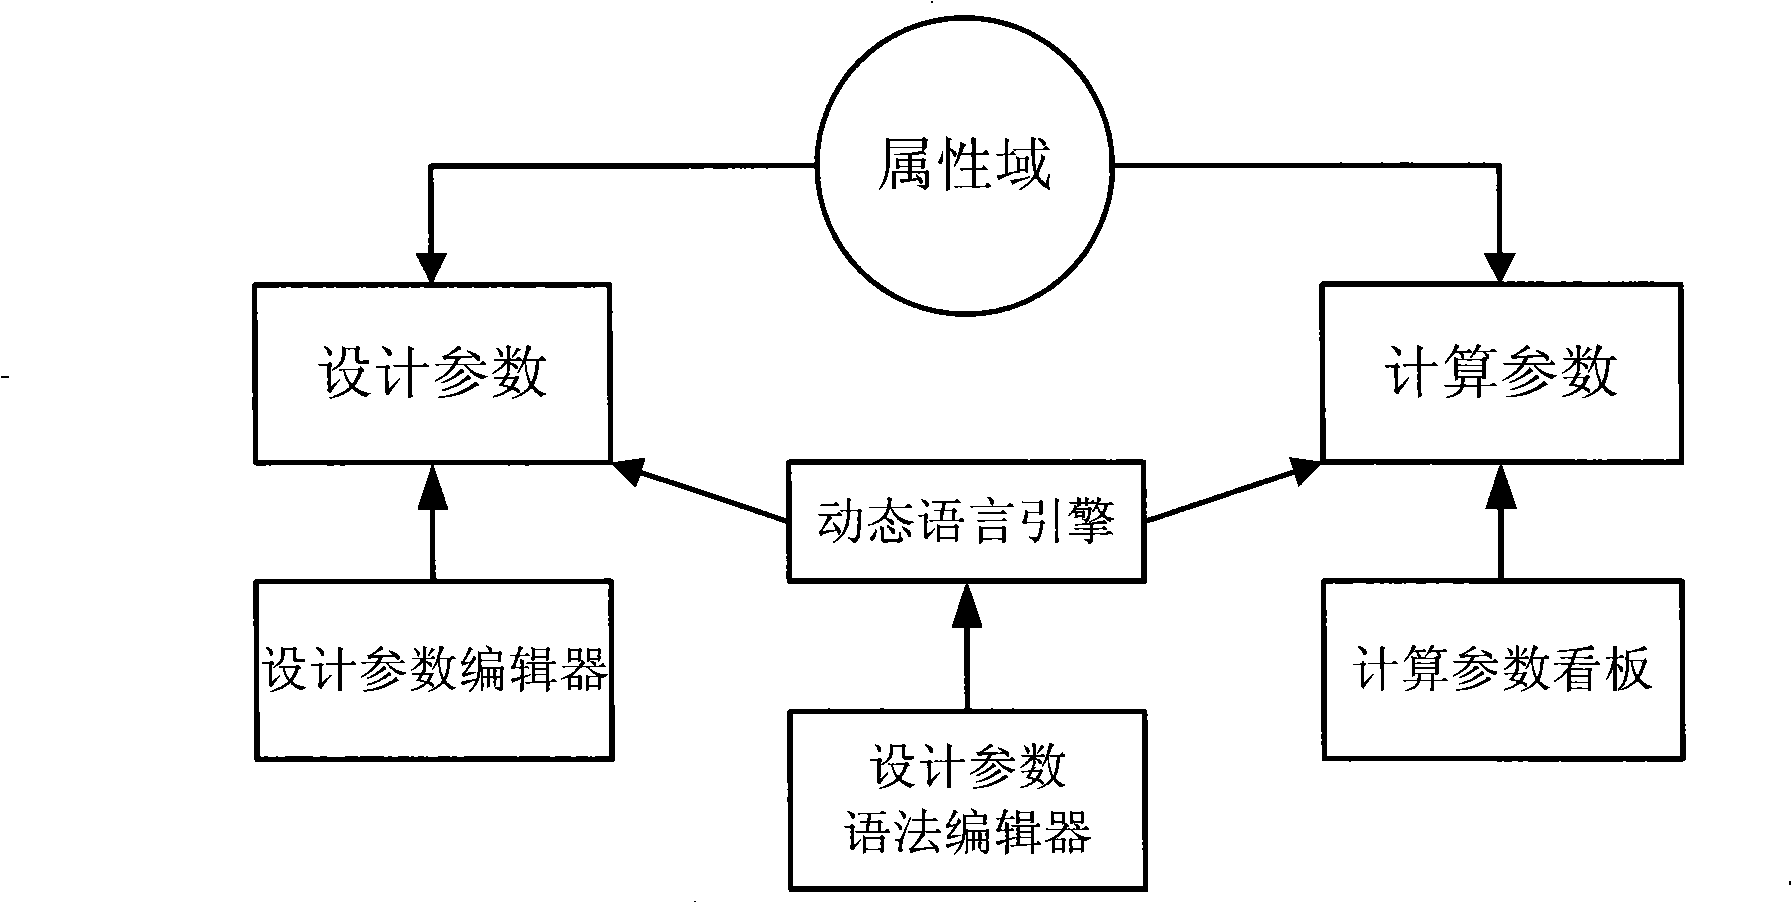 Method for describing product information model